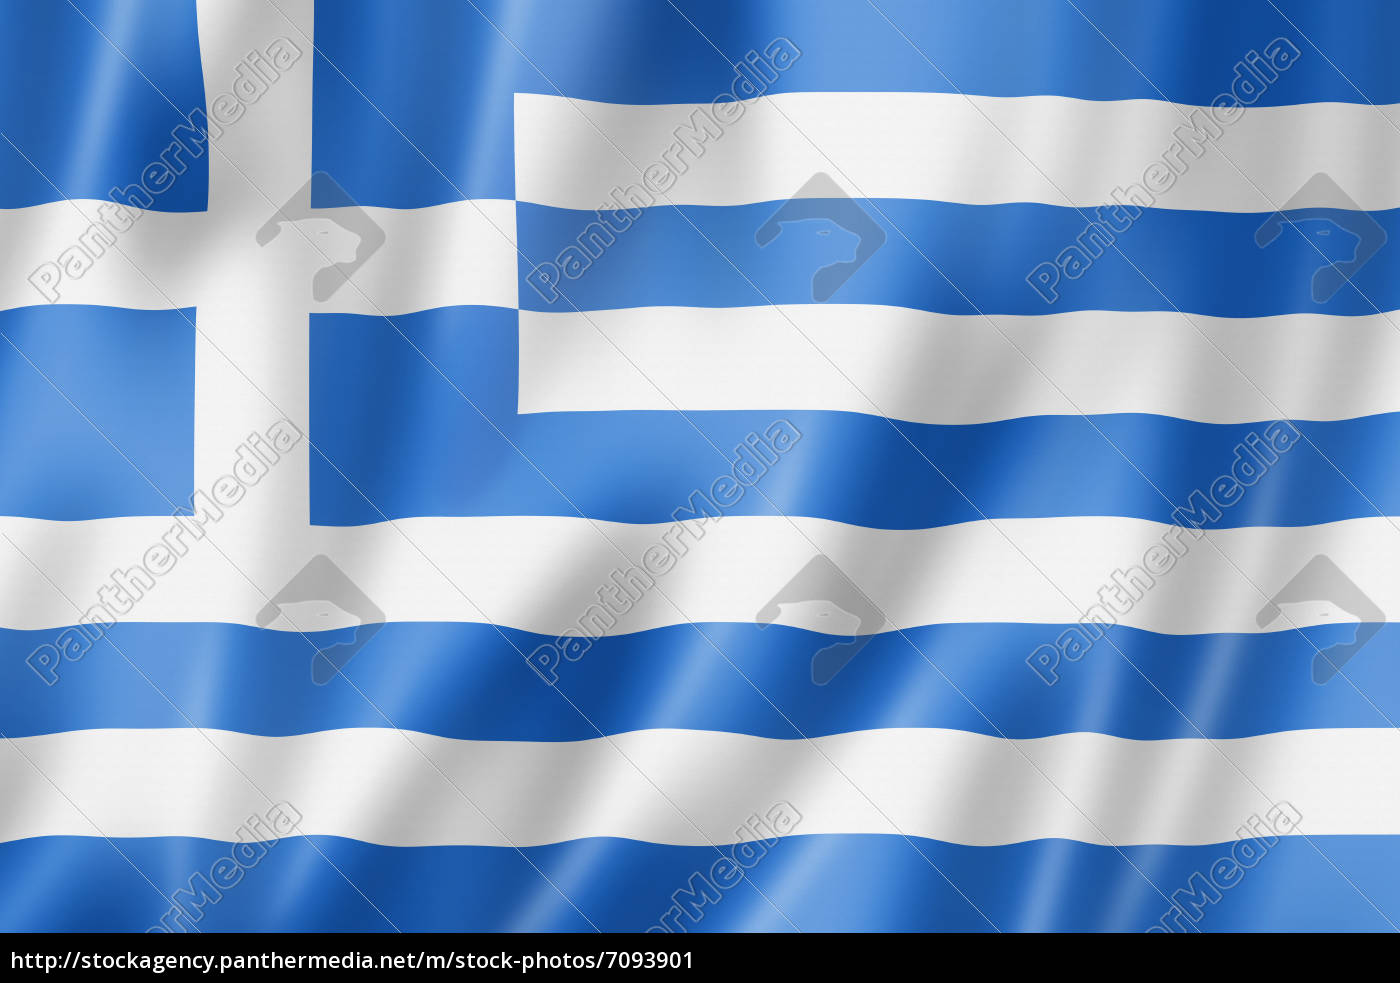 griechische flagge - Lizenzfreies Bild #7093901